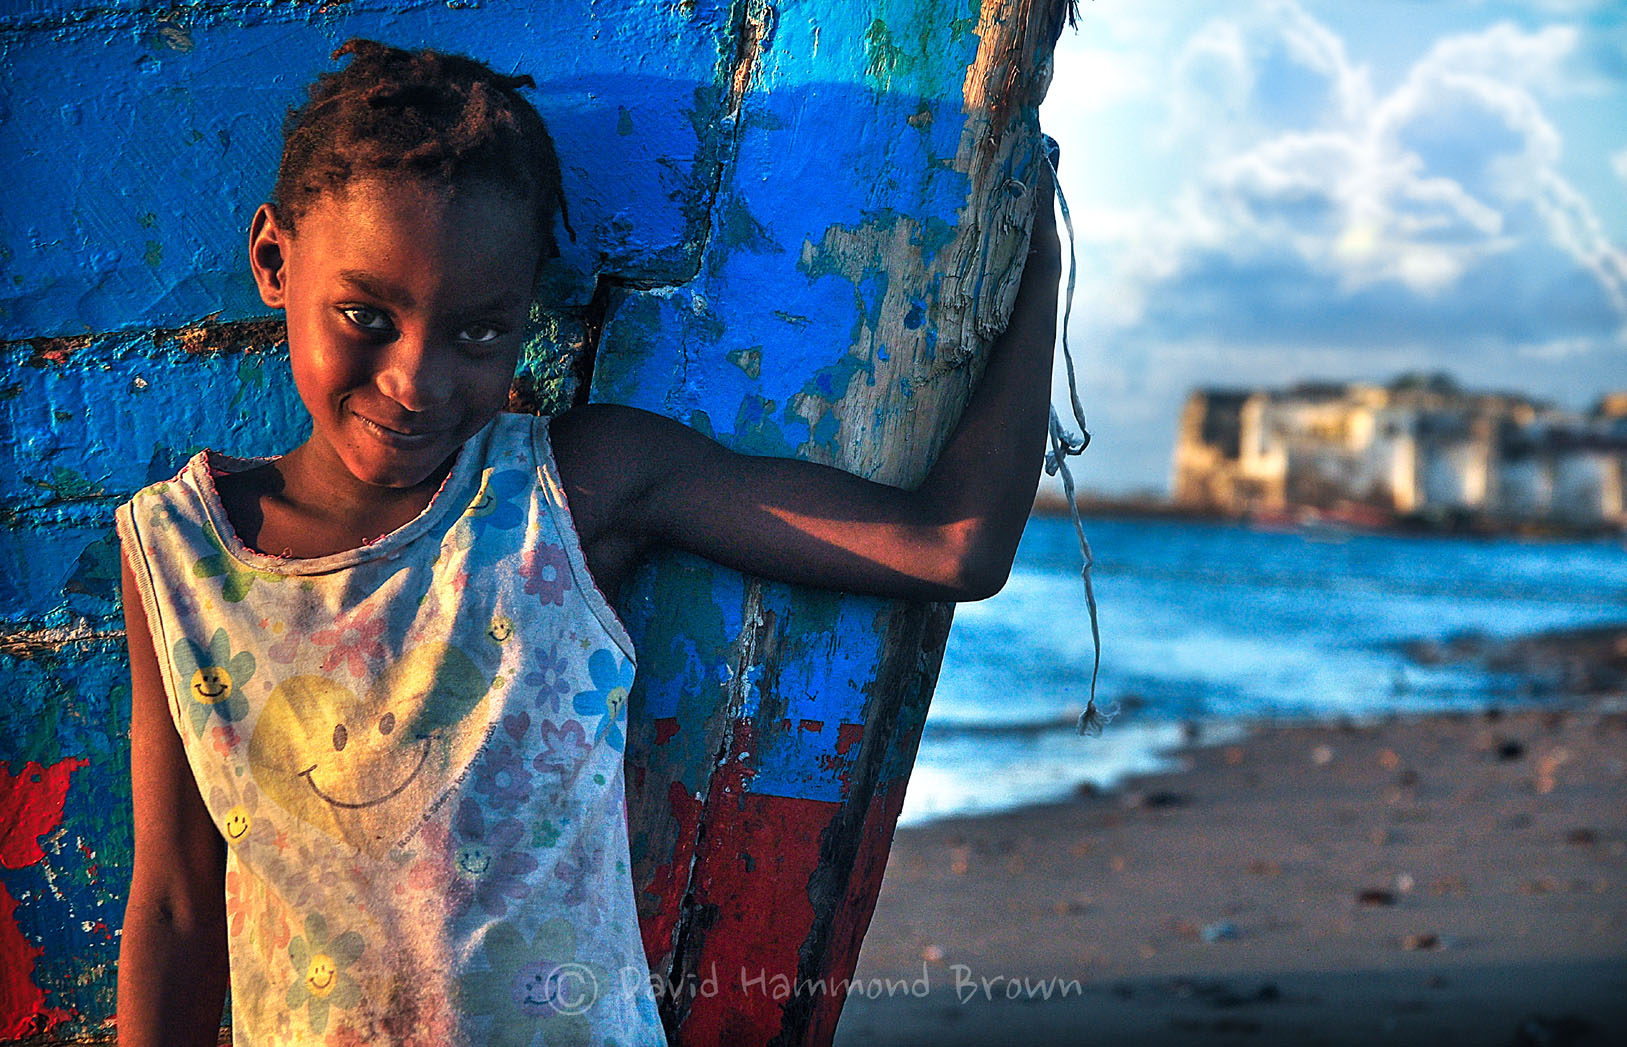 David Hammond Brown Photography - That Smirk - Mozambique